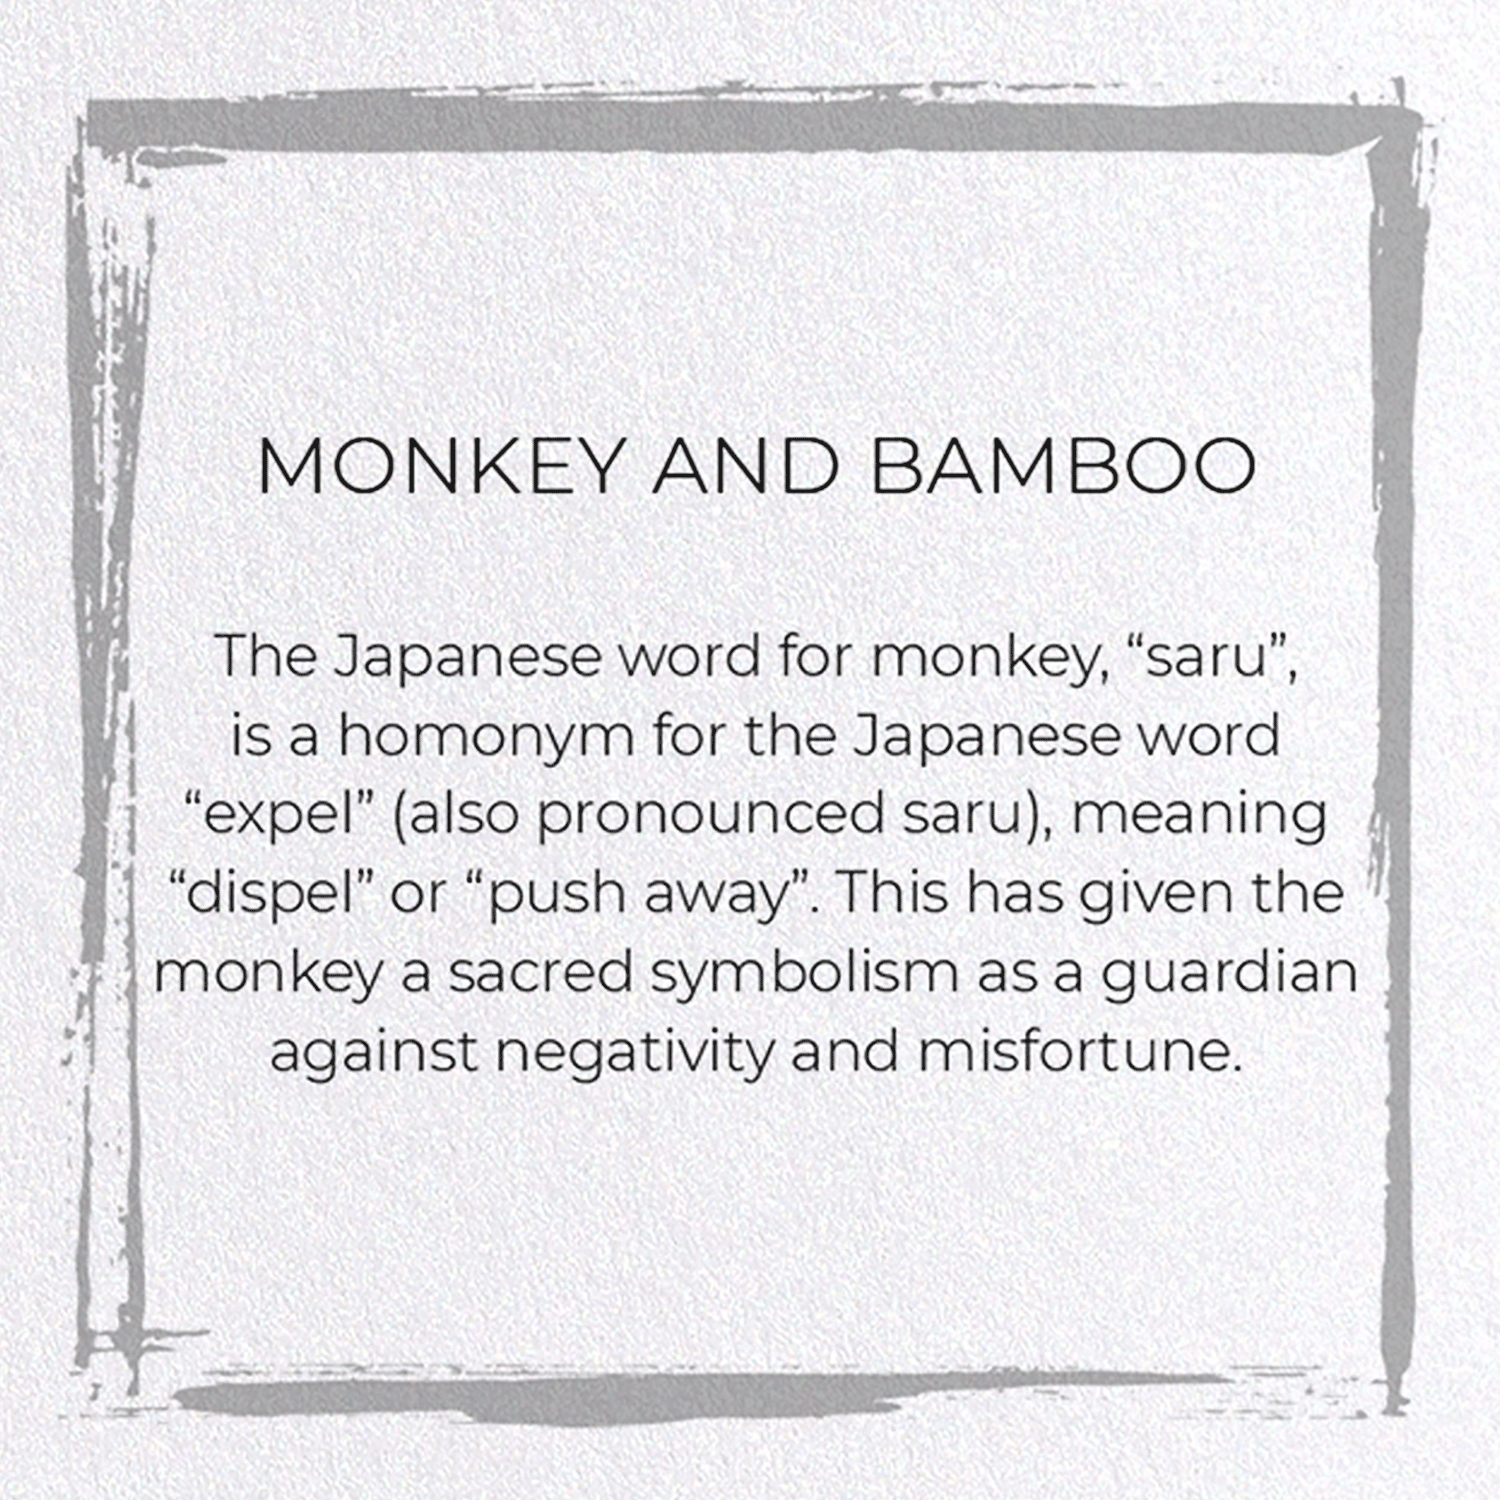 MONKEY AND BAMBOO